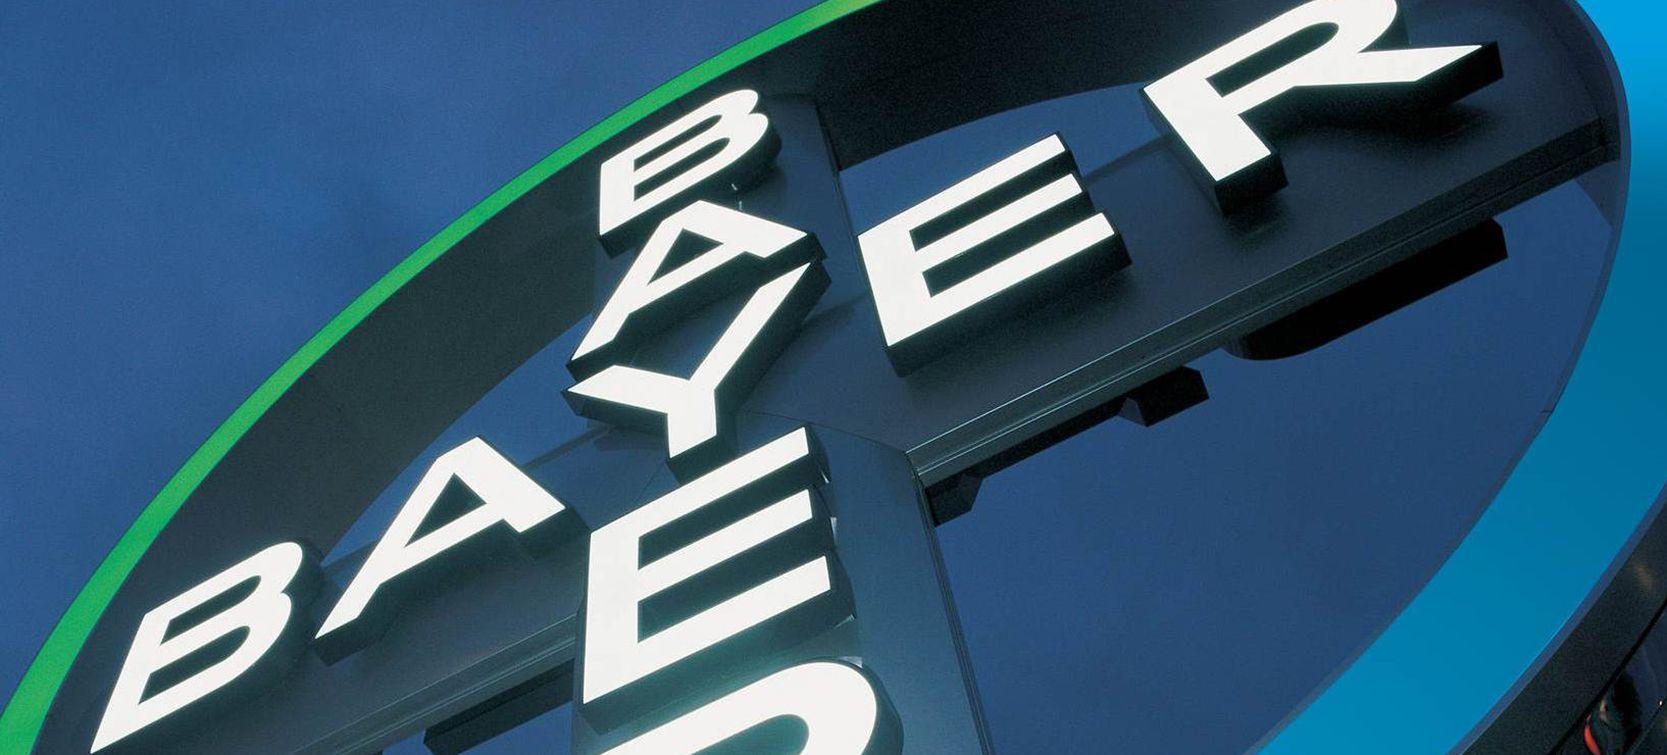 Bayer Corporation Logo - Bayer G4A: Advancing Digital Health Through Collaboration